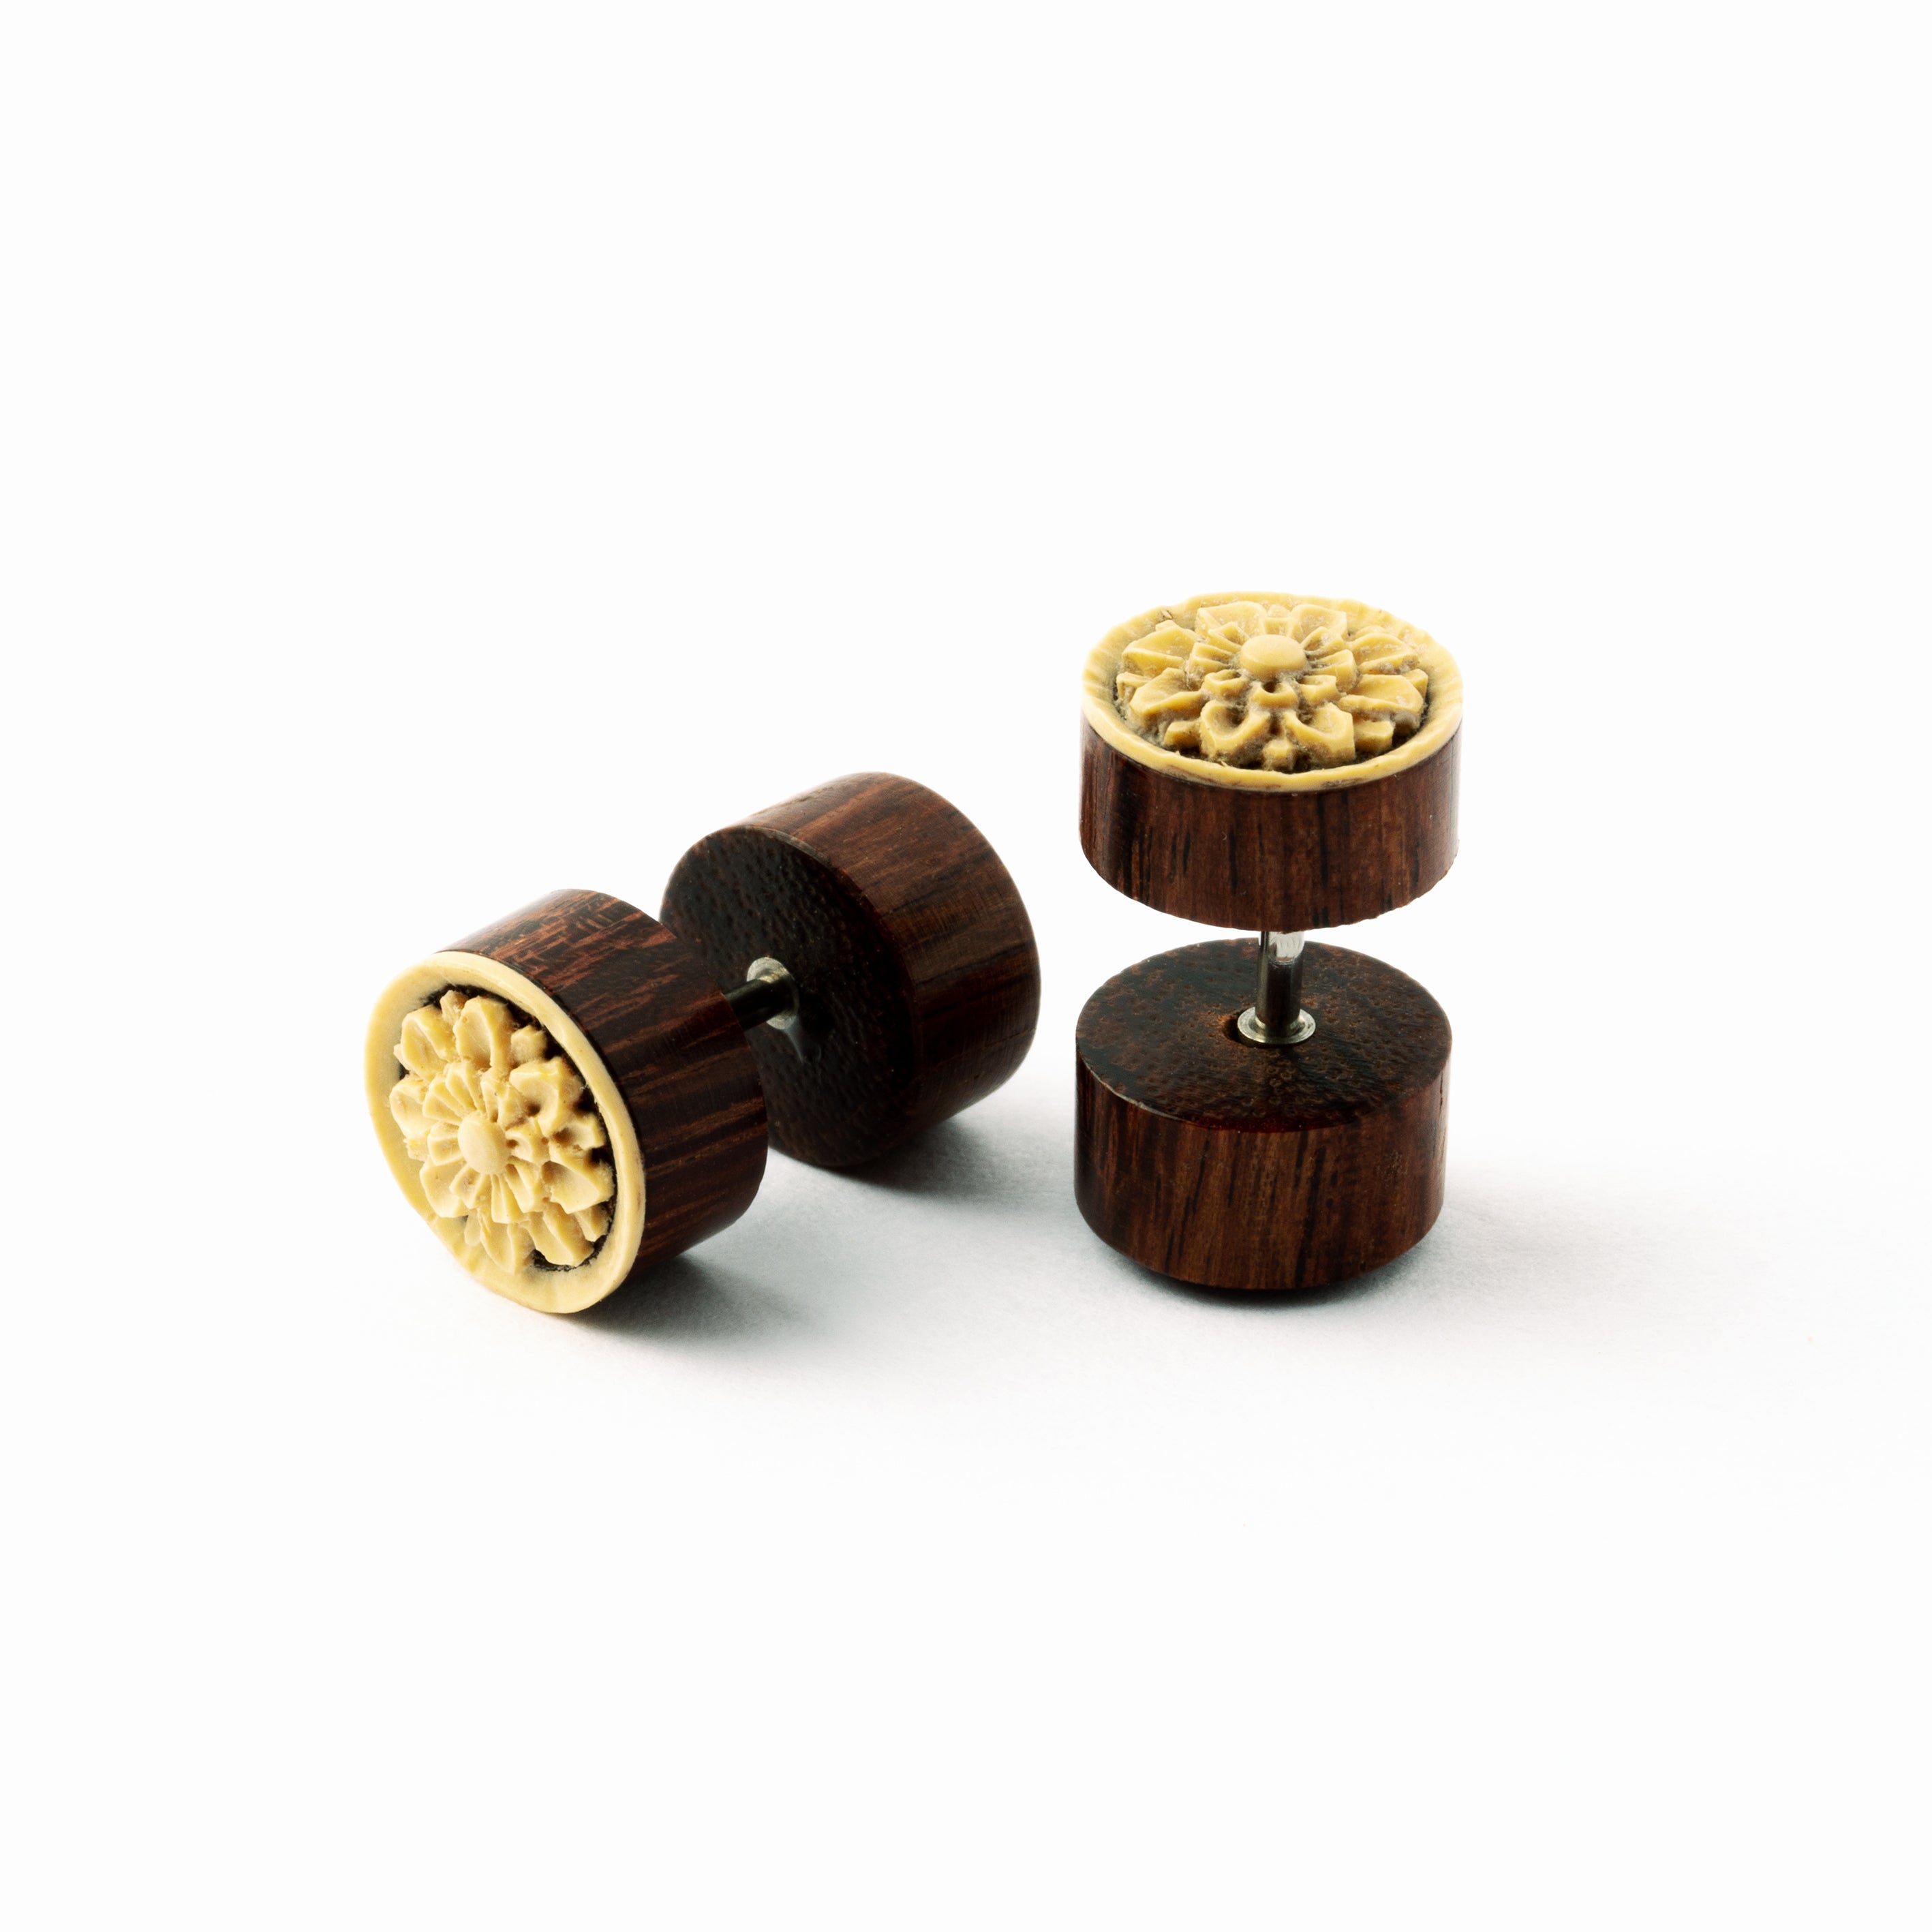 pair of carved Lotus wood fake gauge plug earrings front and side view